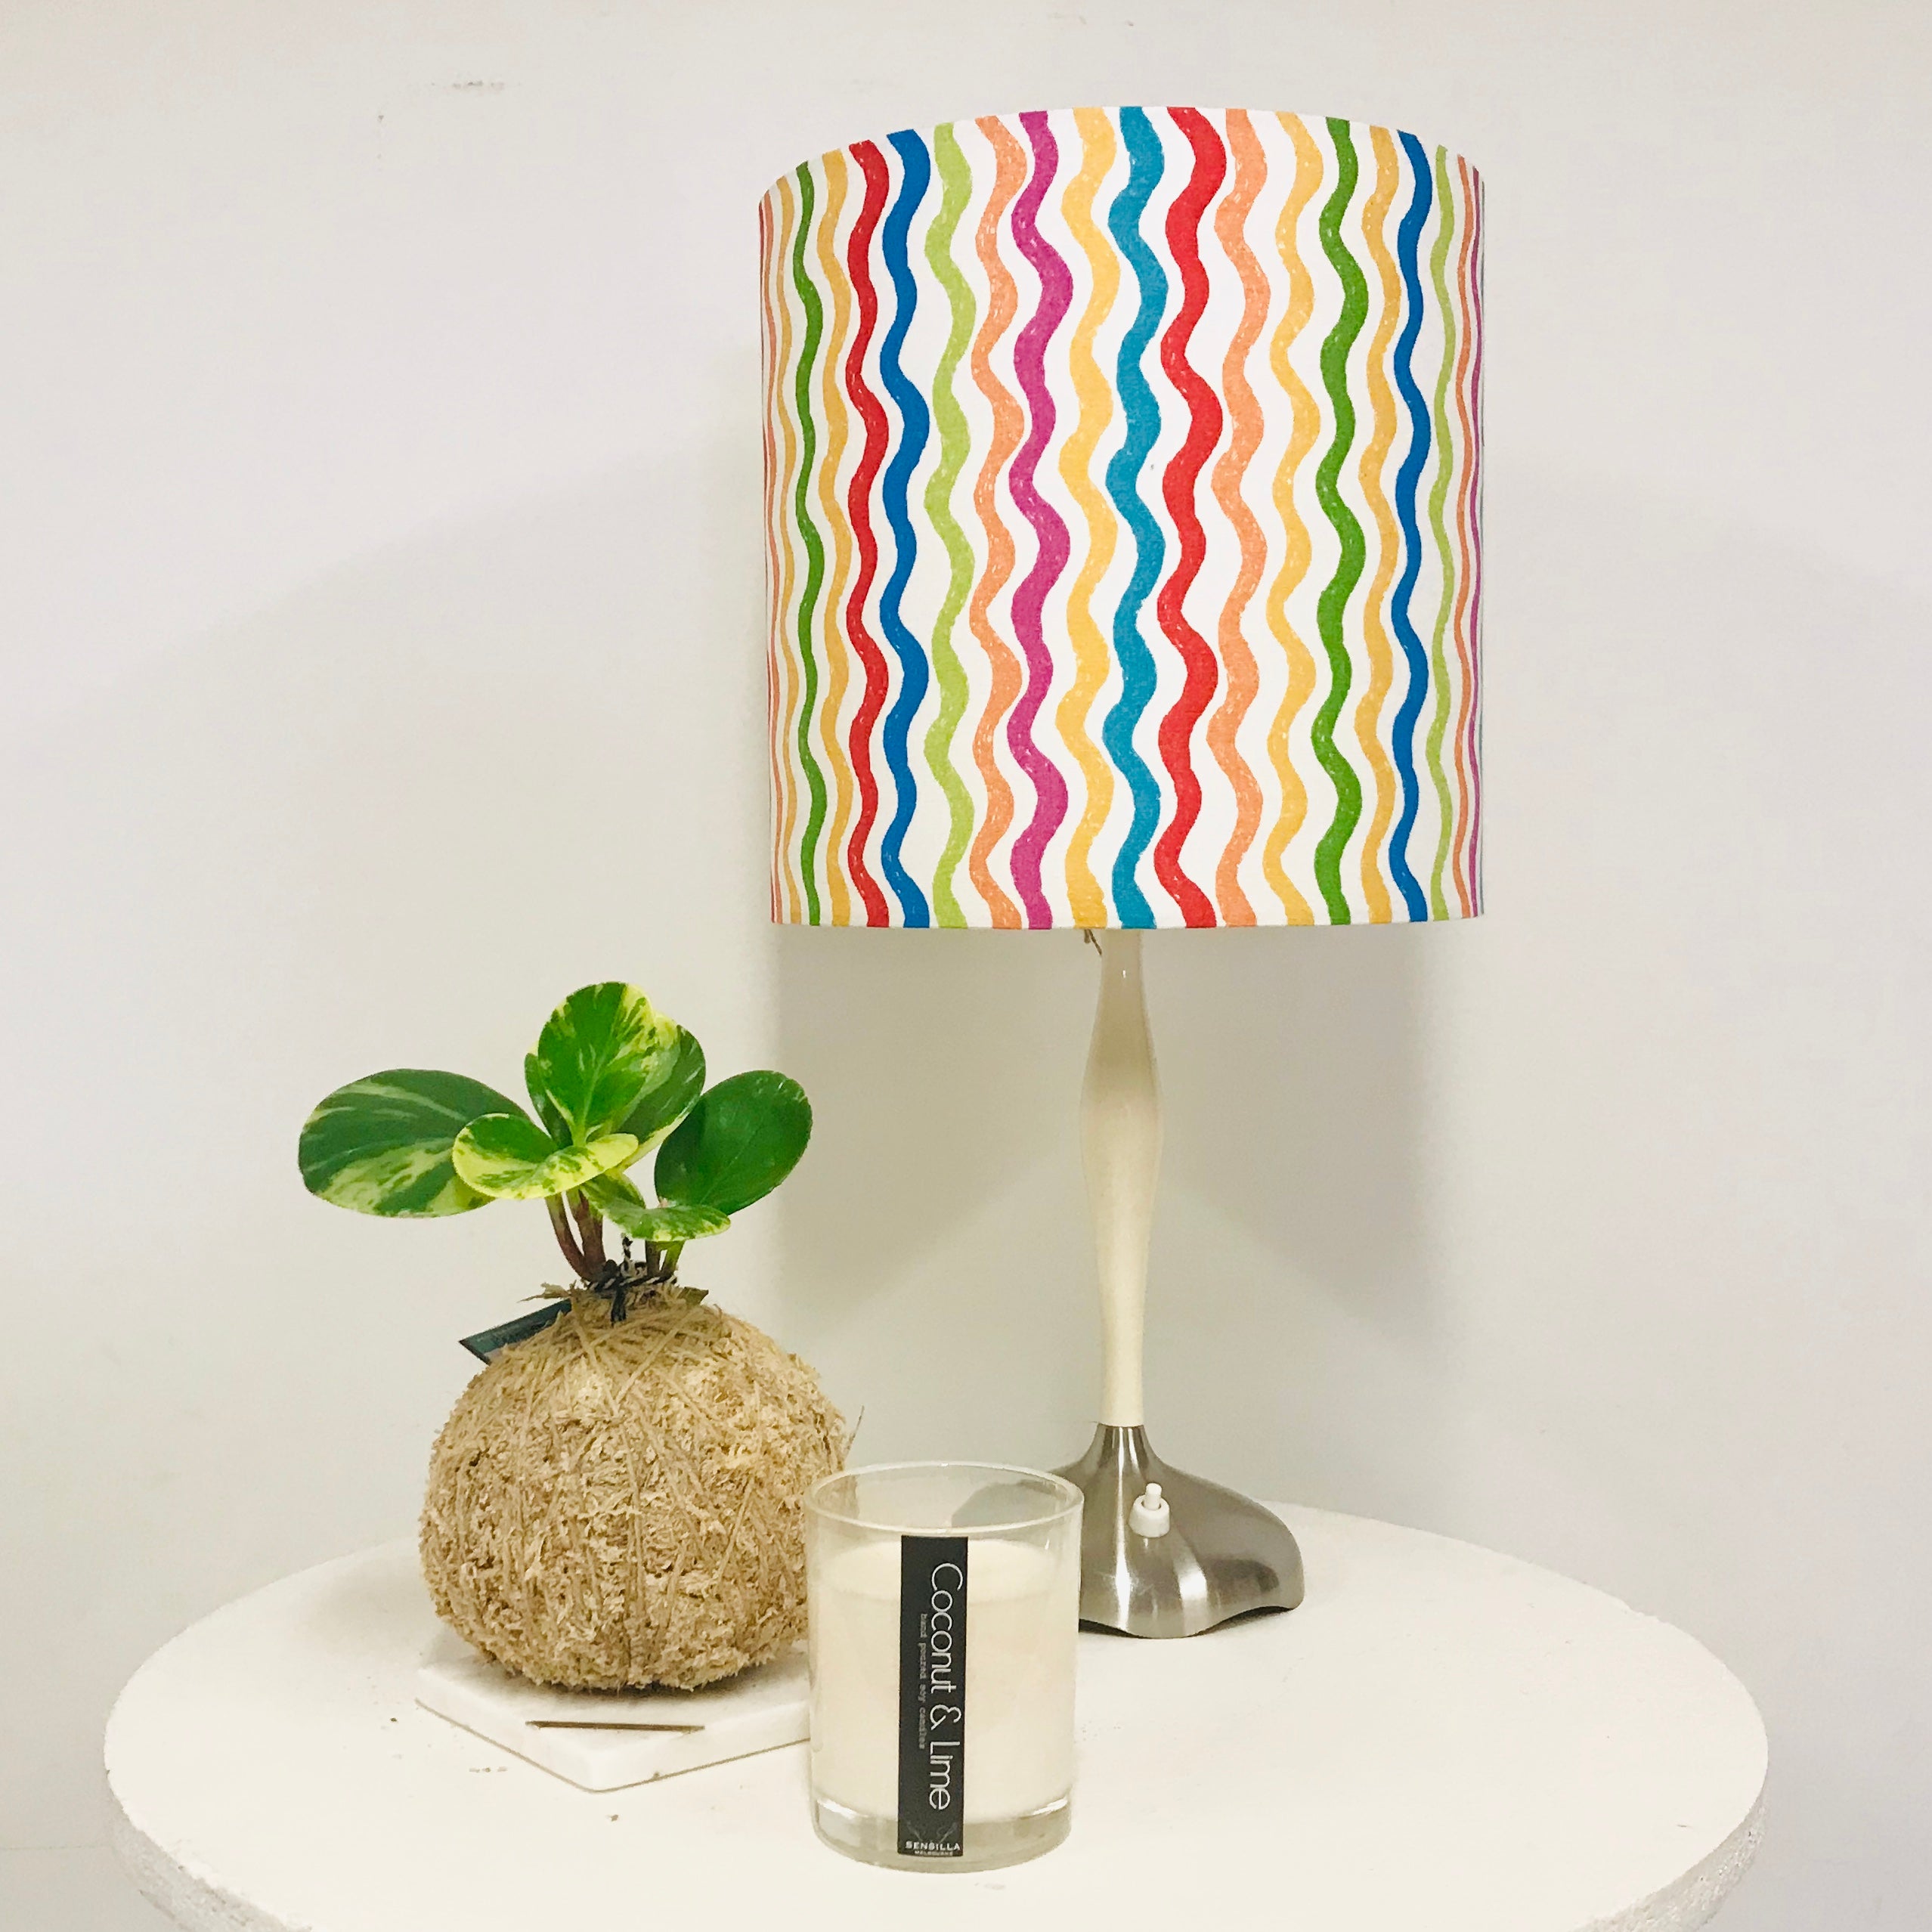 Custom Lamp Shade only - Rainbow Waves